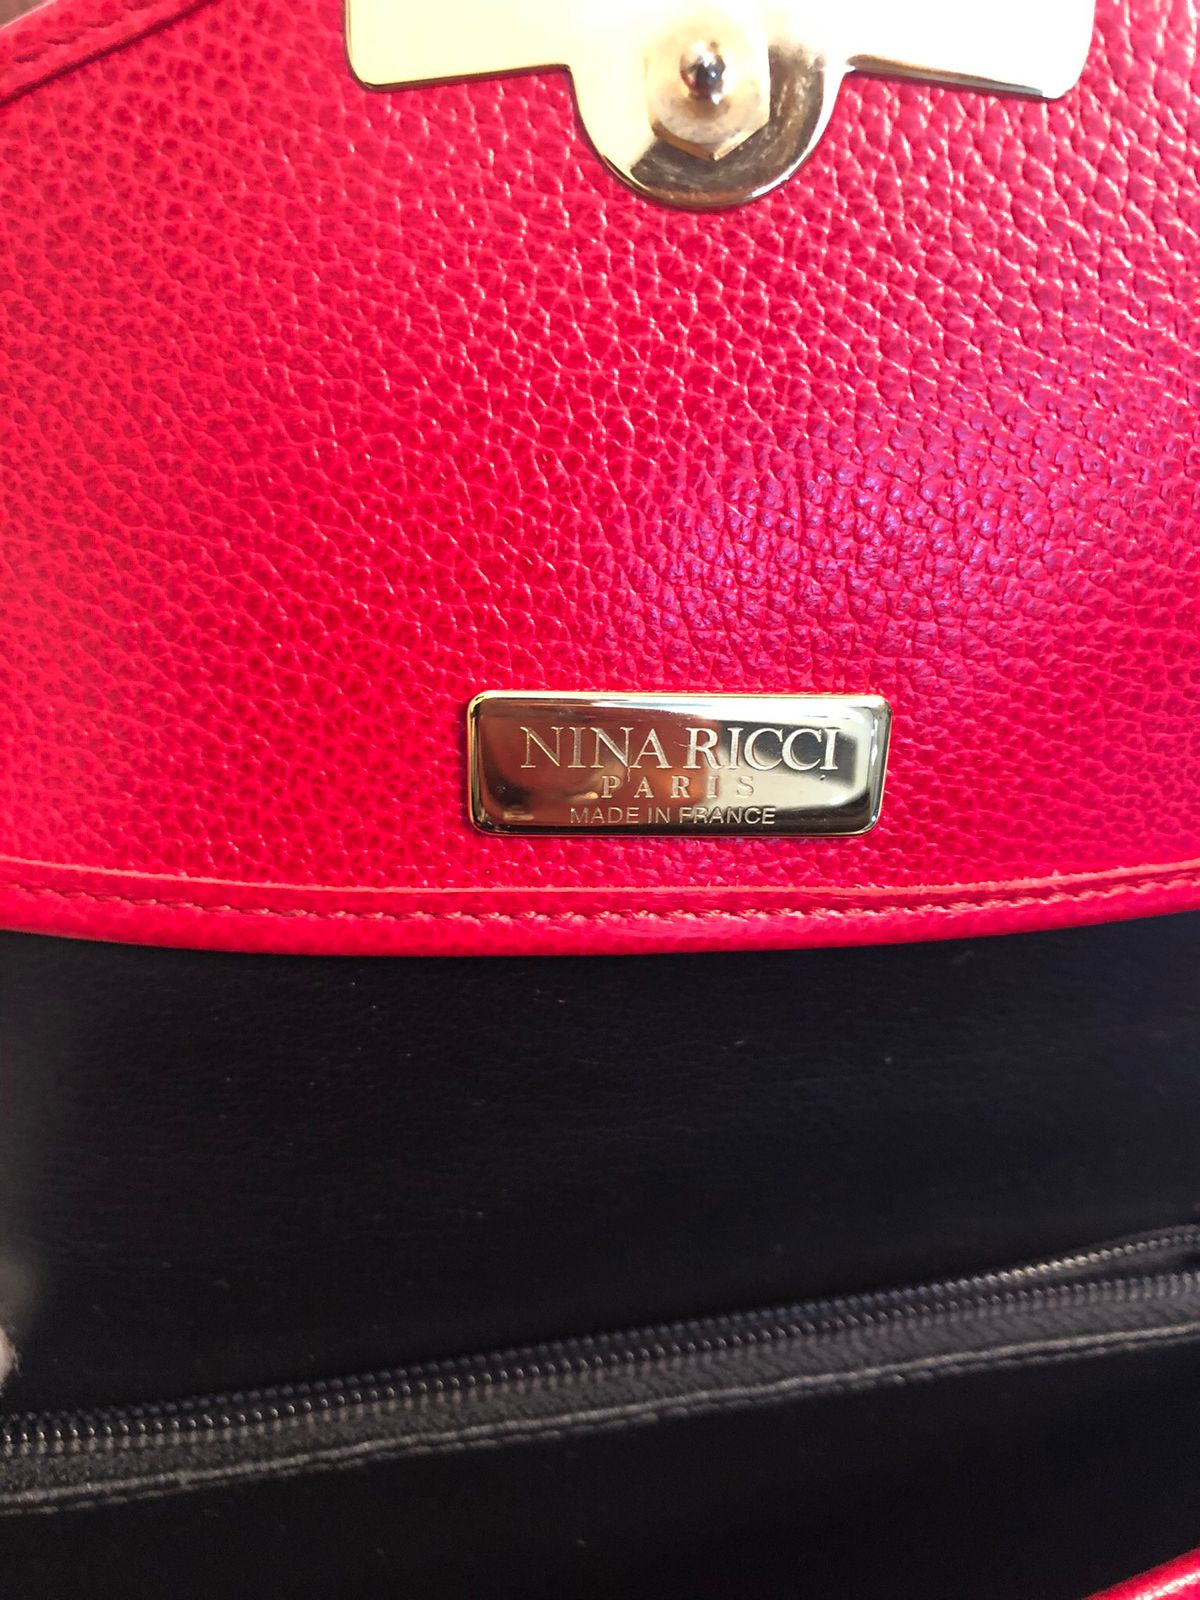 NINA RICCI Shoulder bags vintage Lysis Paris pre-owned secondhand